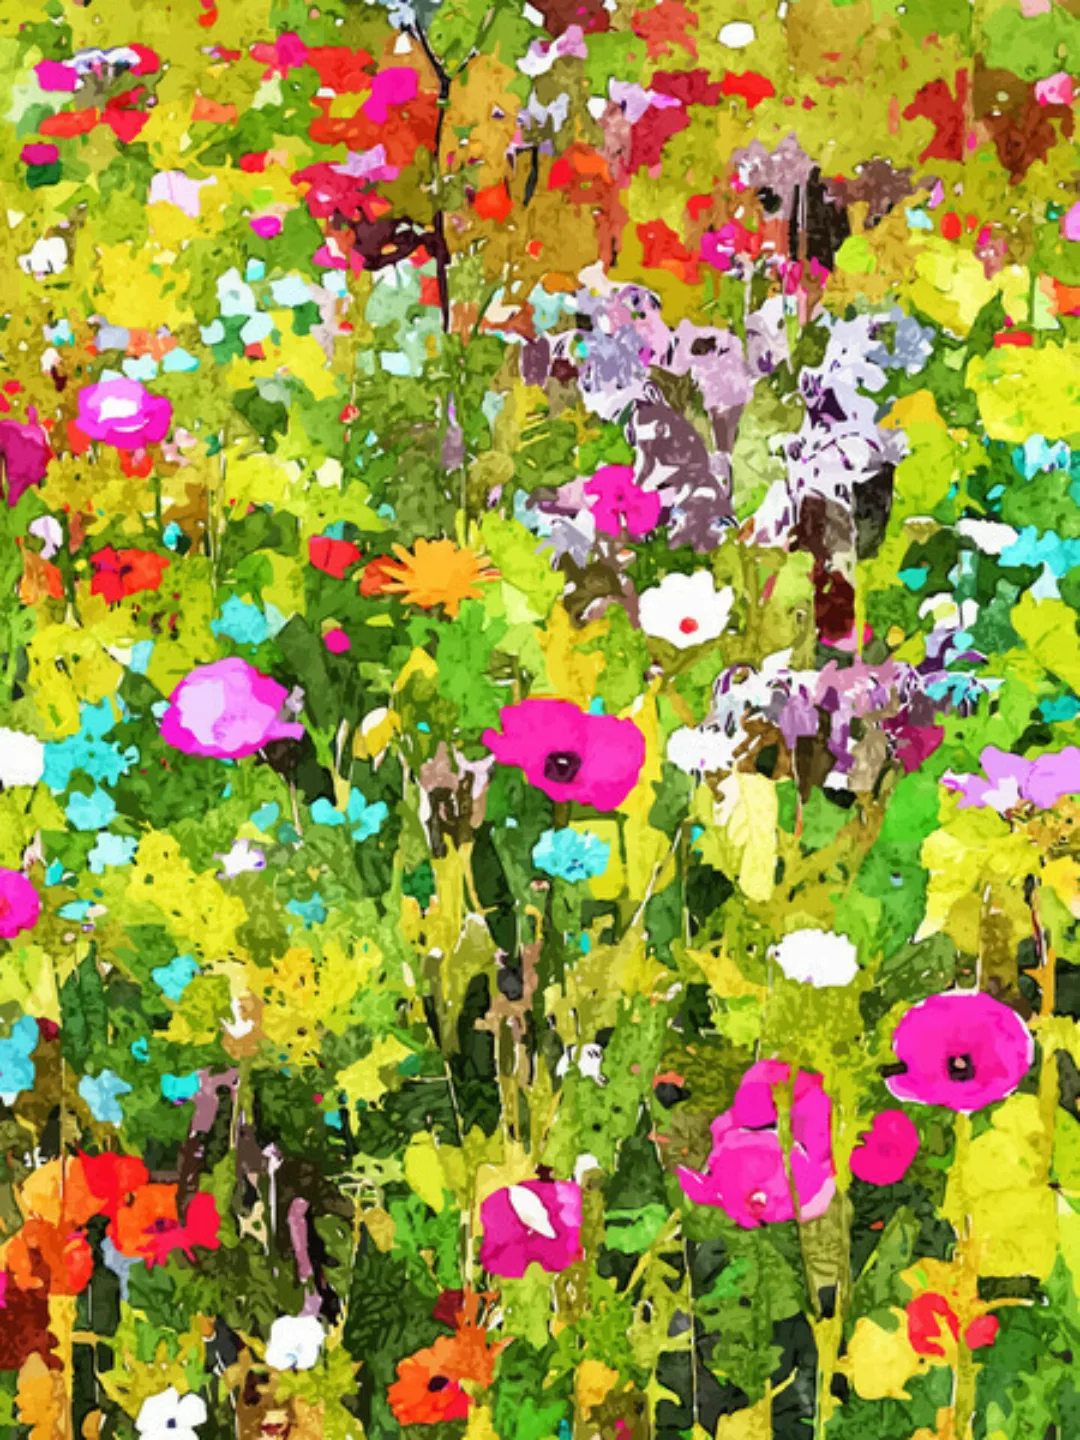 Poster / Leinwandbild - Meadow Flowers günstig online kaufen